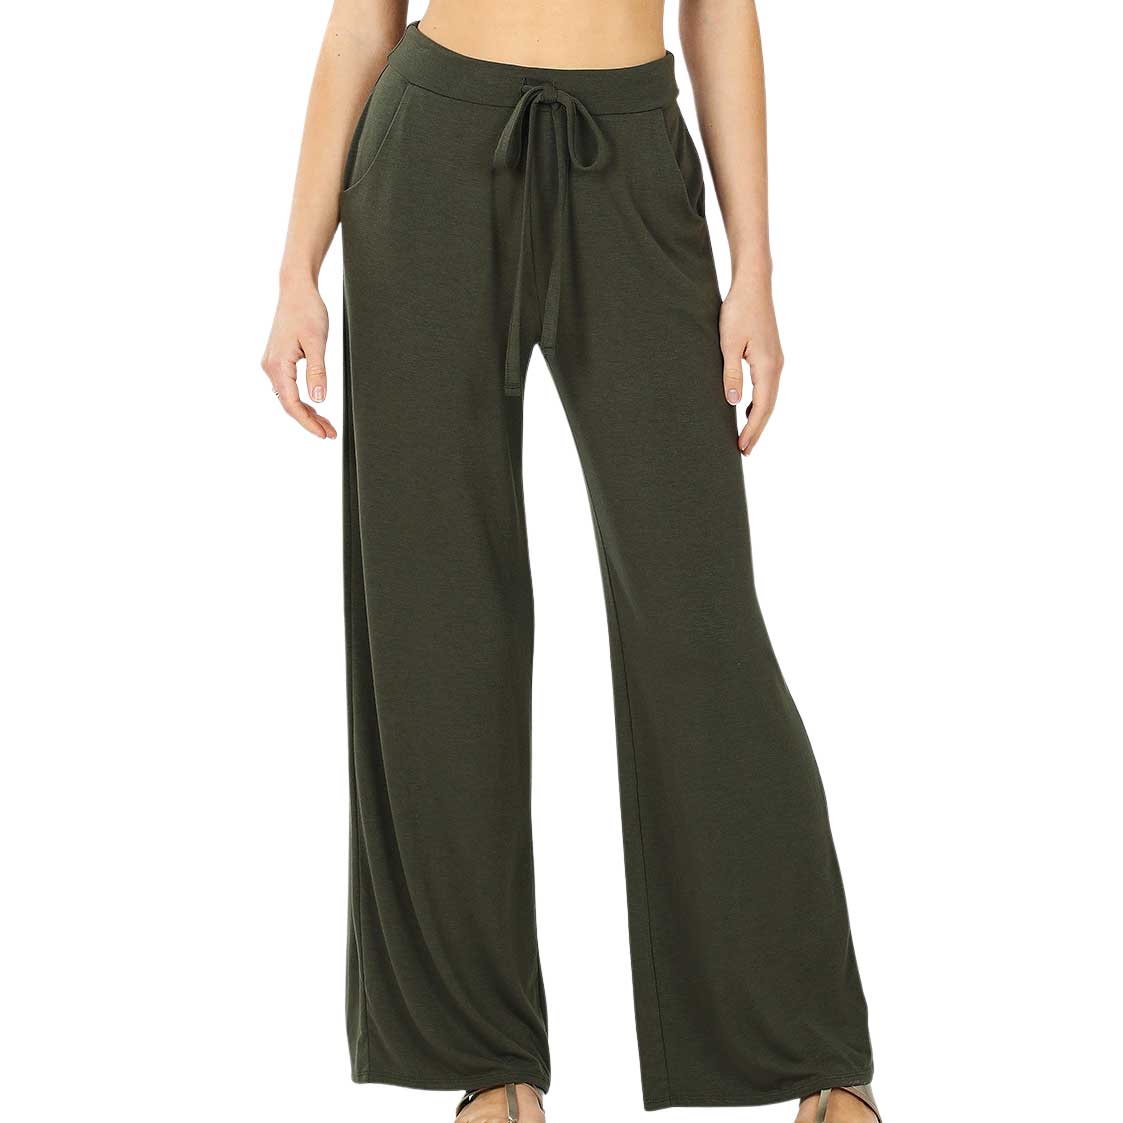 Lounge Pants - Loose Fit 1614 DARK OLIVE Lounge Pants - Loose Fit 1614 - Large